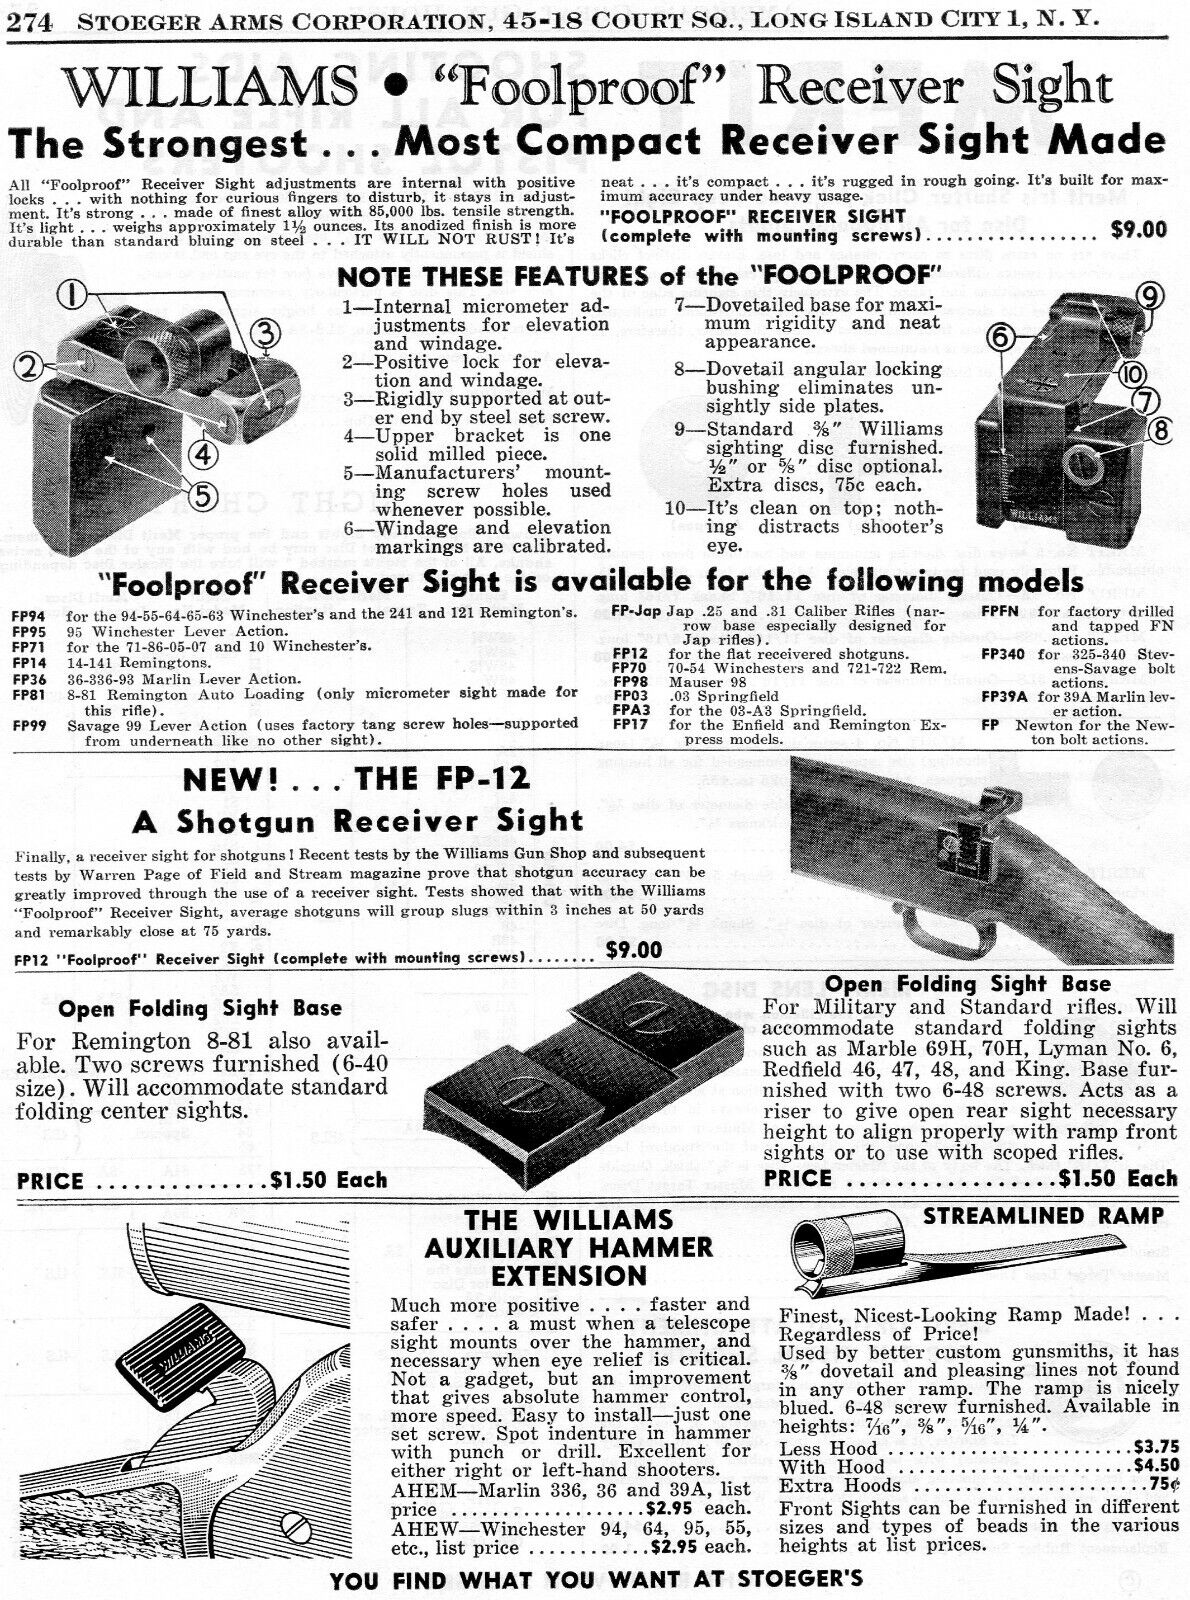 1954 Print Ad of Williams Foolproof Rifle Receiver Sight, FP-12 Shotgun Sight